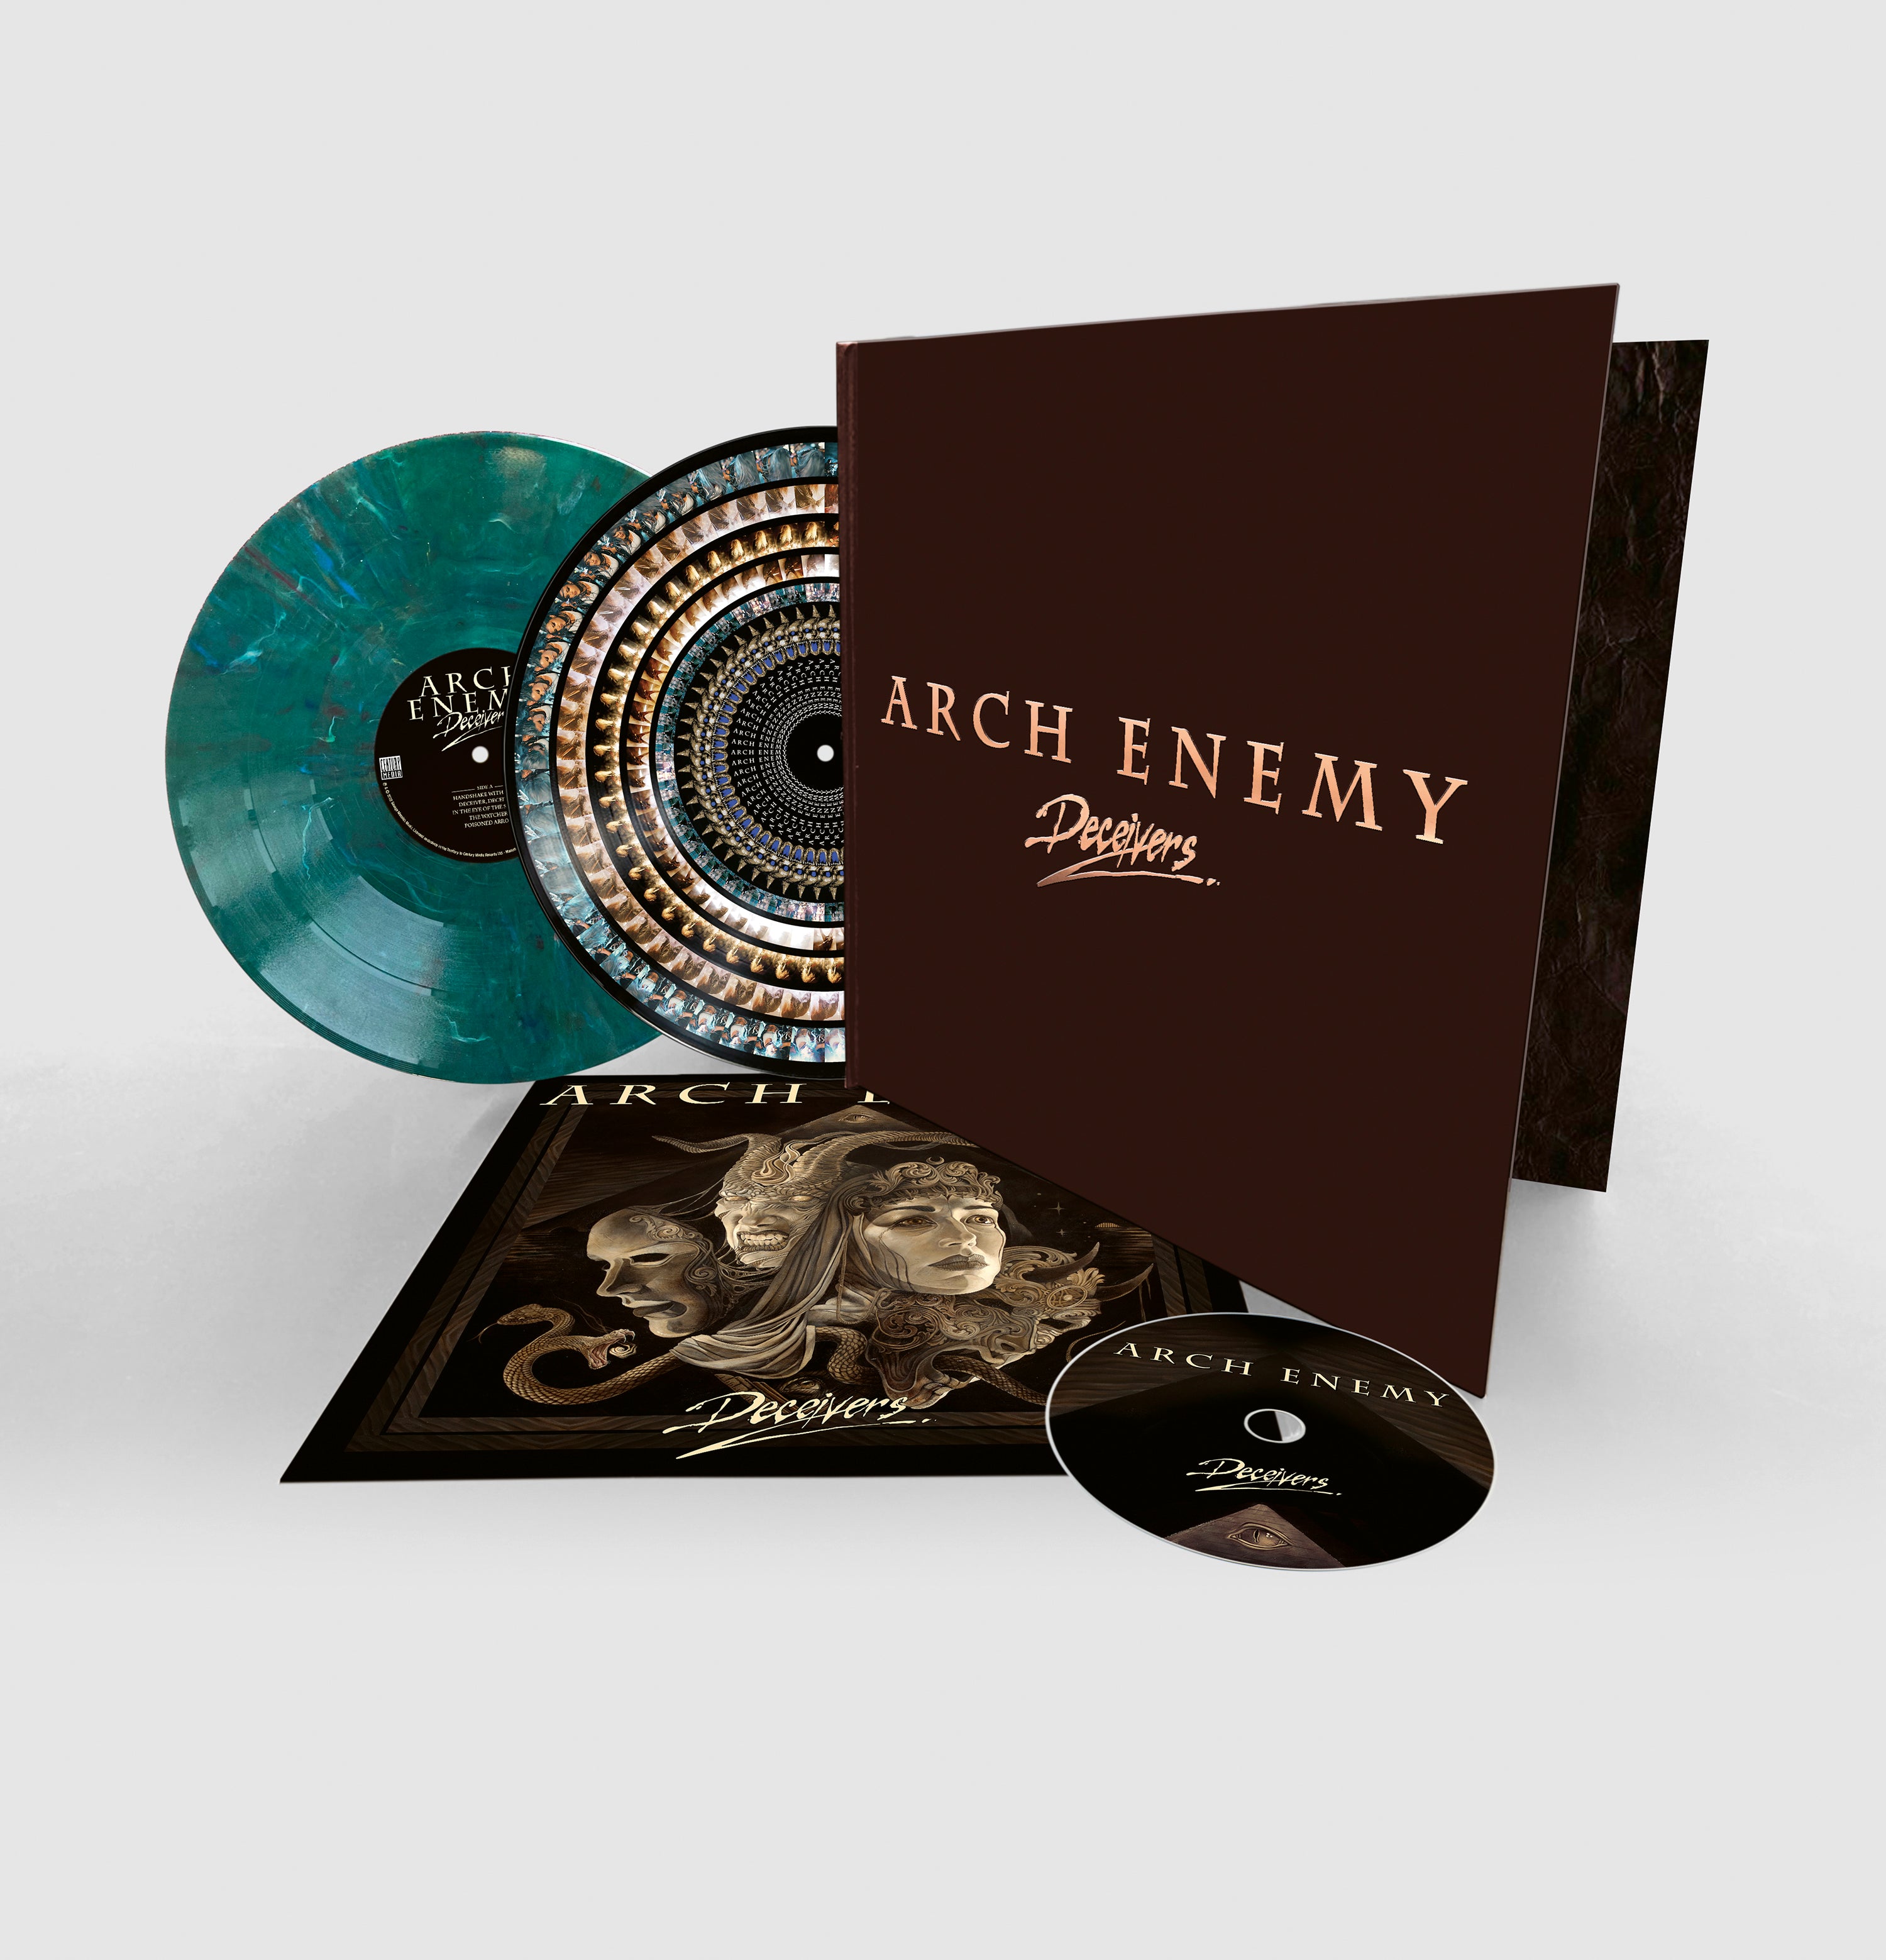 Arch Enemy - Deceivers (Ltd. Deluxe multicolored LP+Zoetrope LP+CD Art